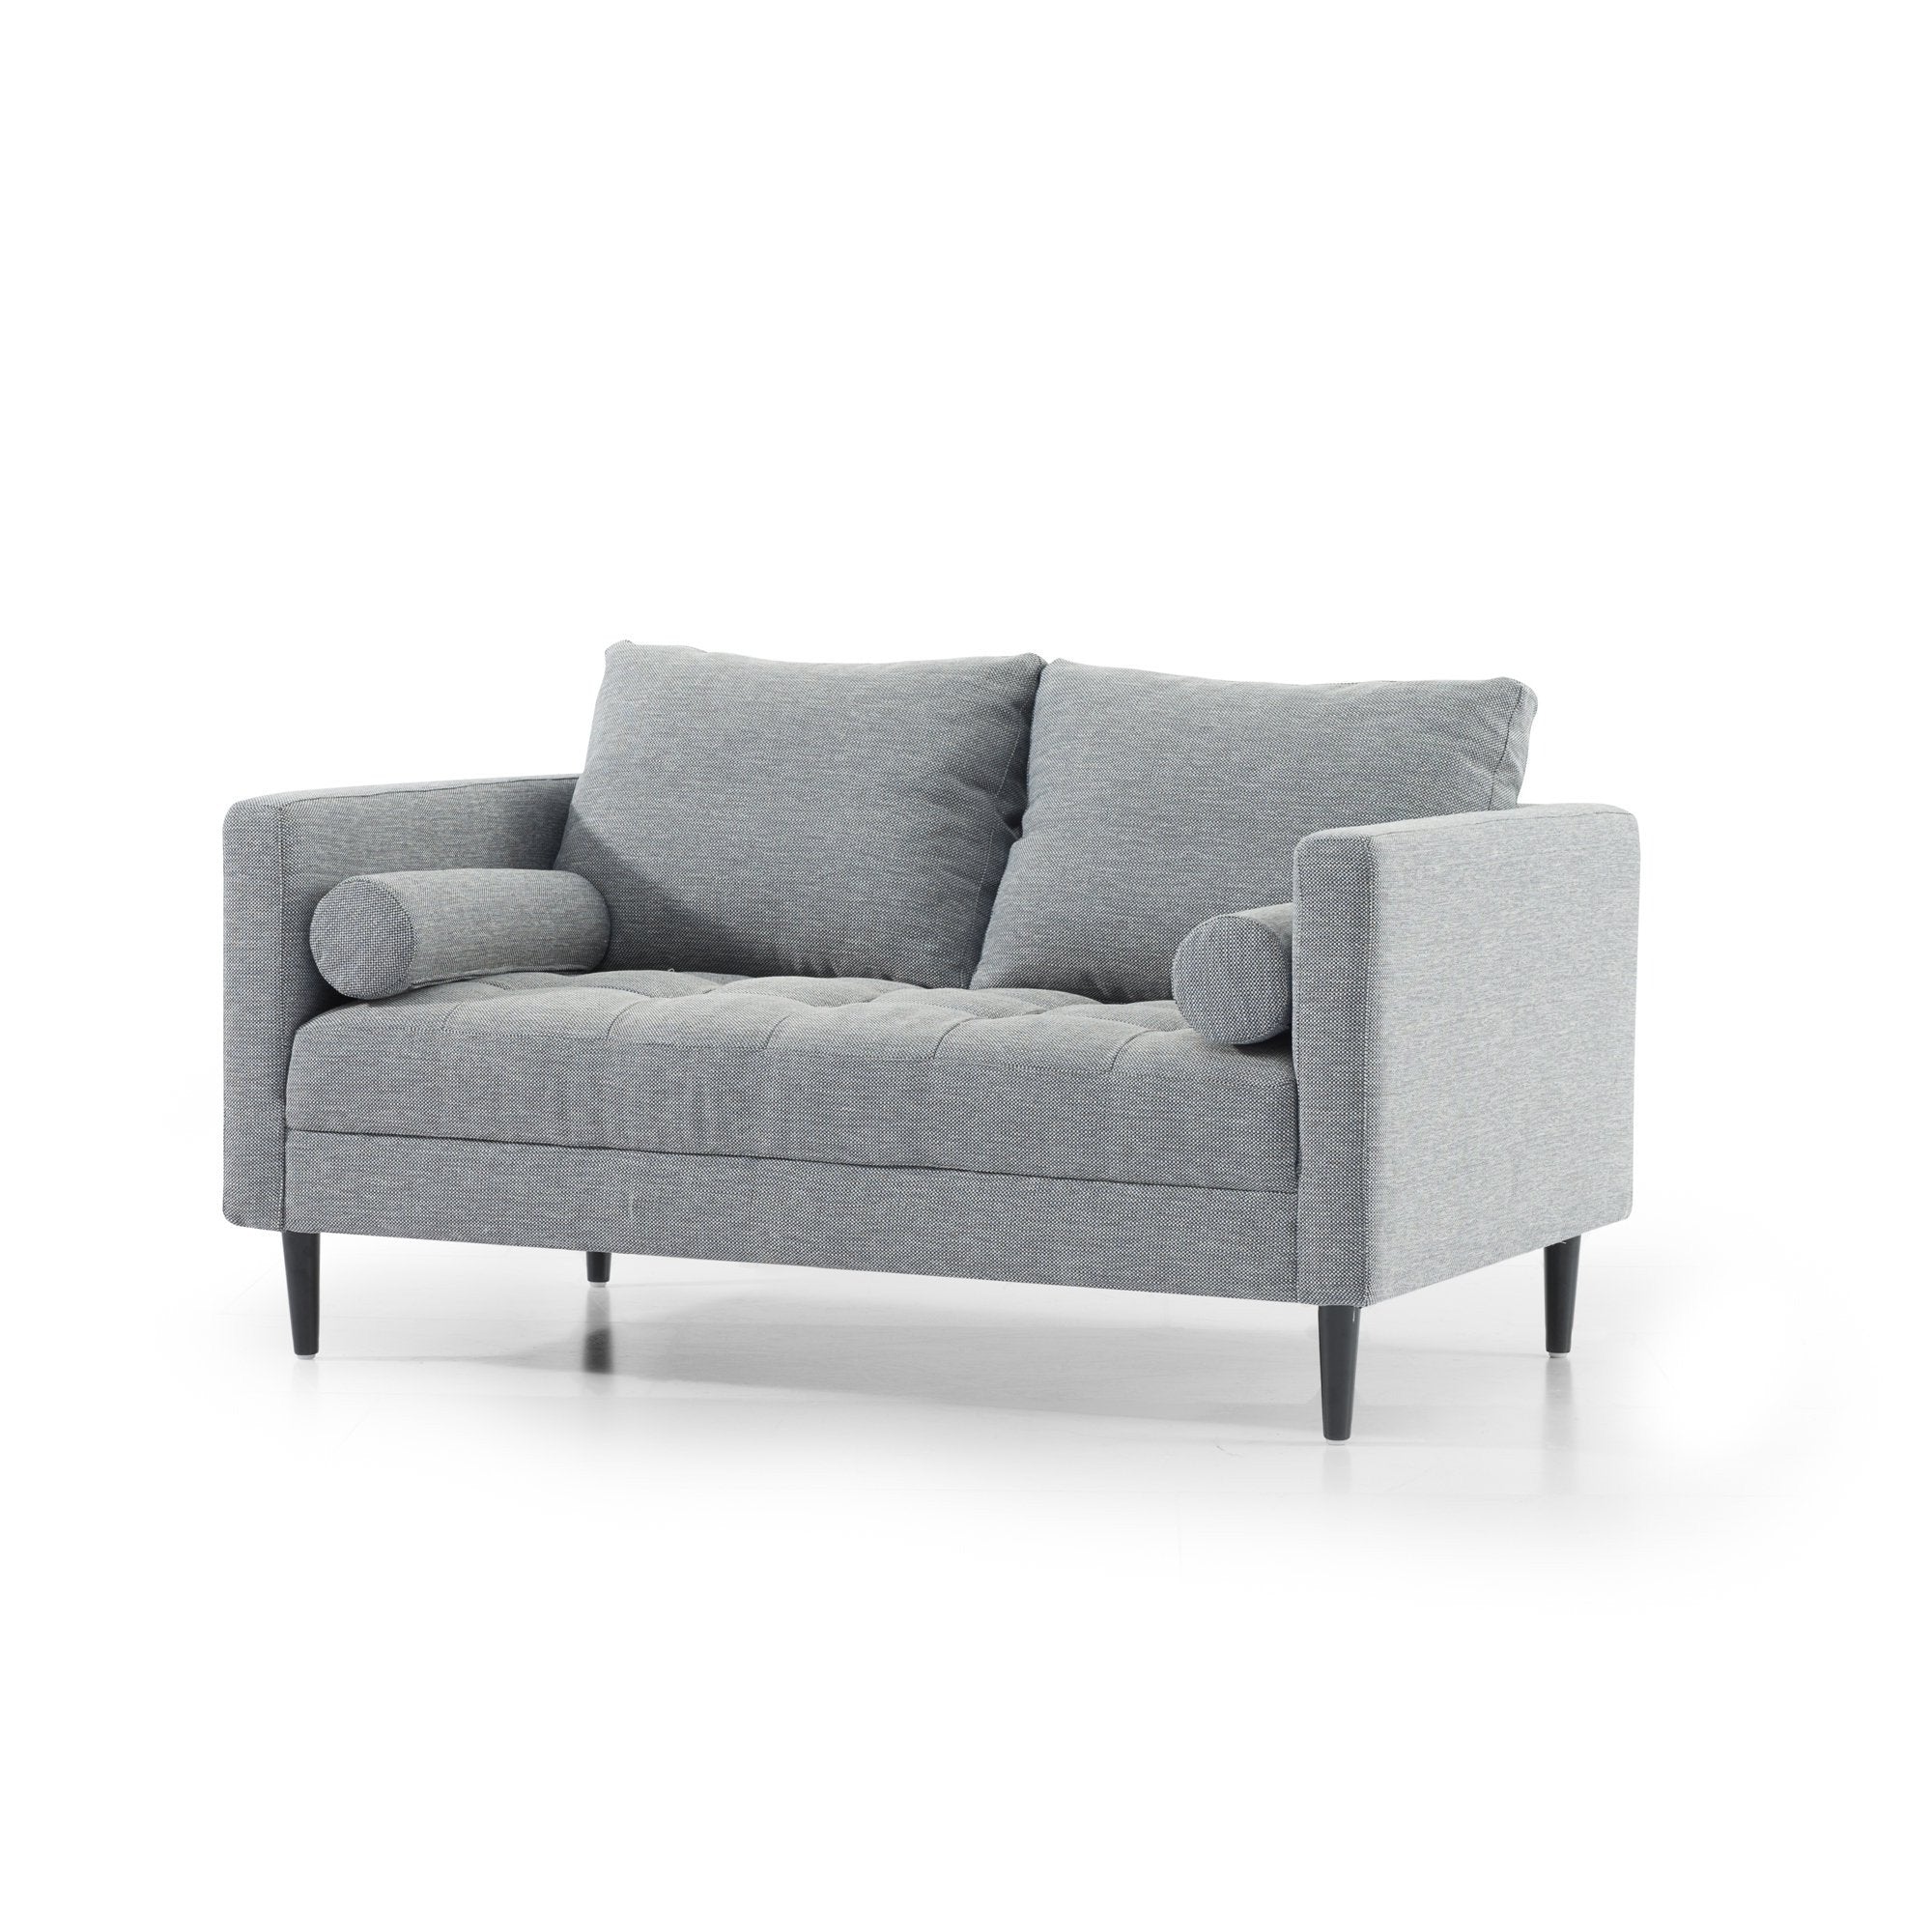 Ava 2 Seater Fabric Sofa - Navy Grey with Black Legs